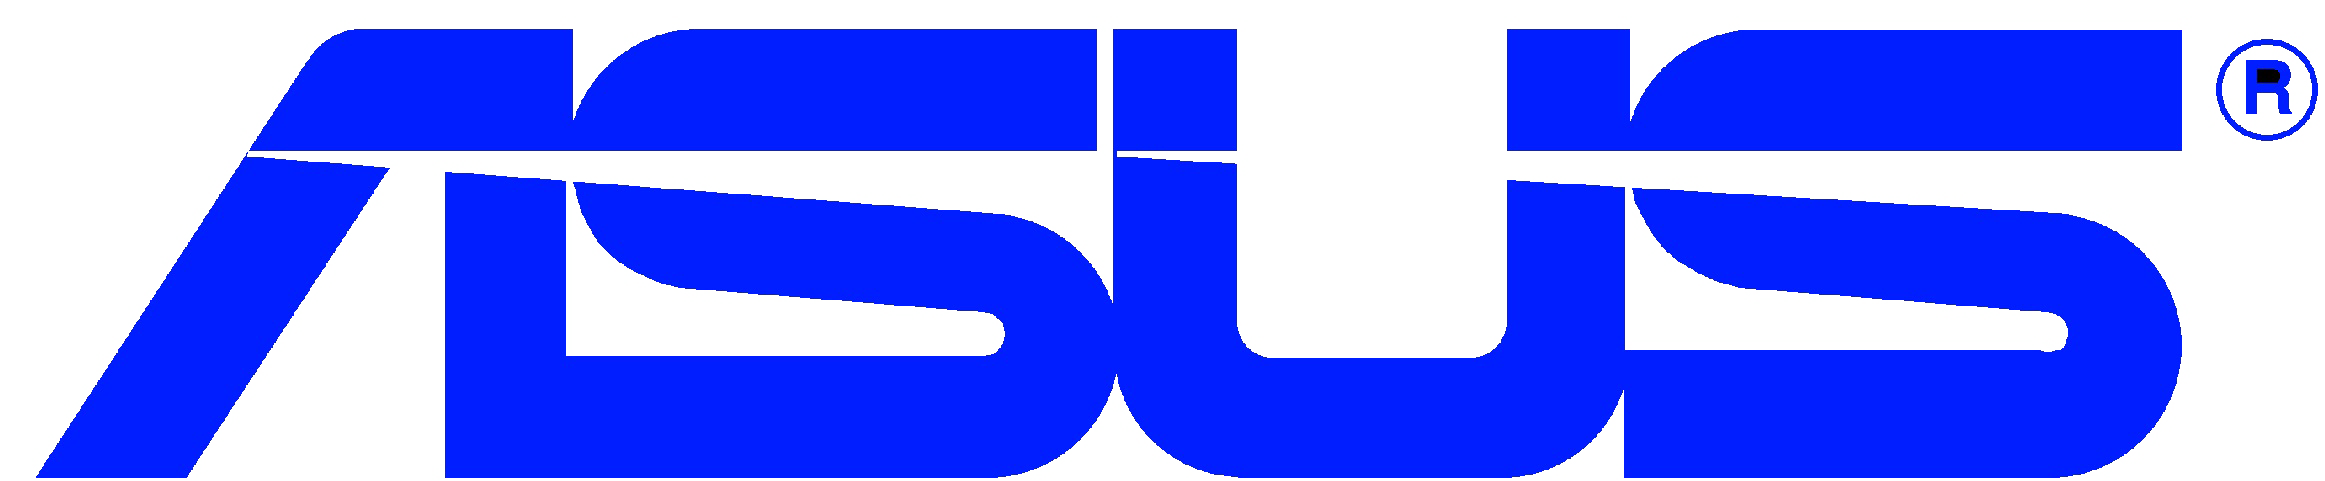 Asus logo imagen Transparente